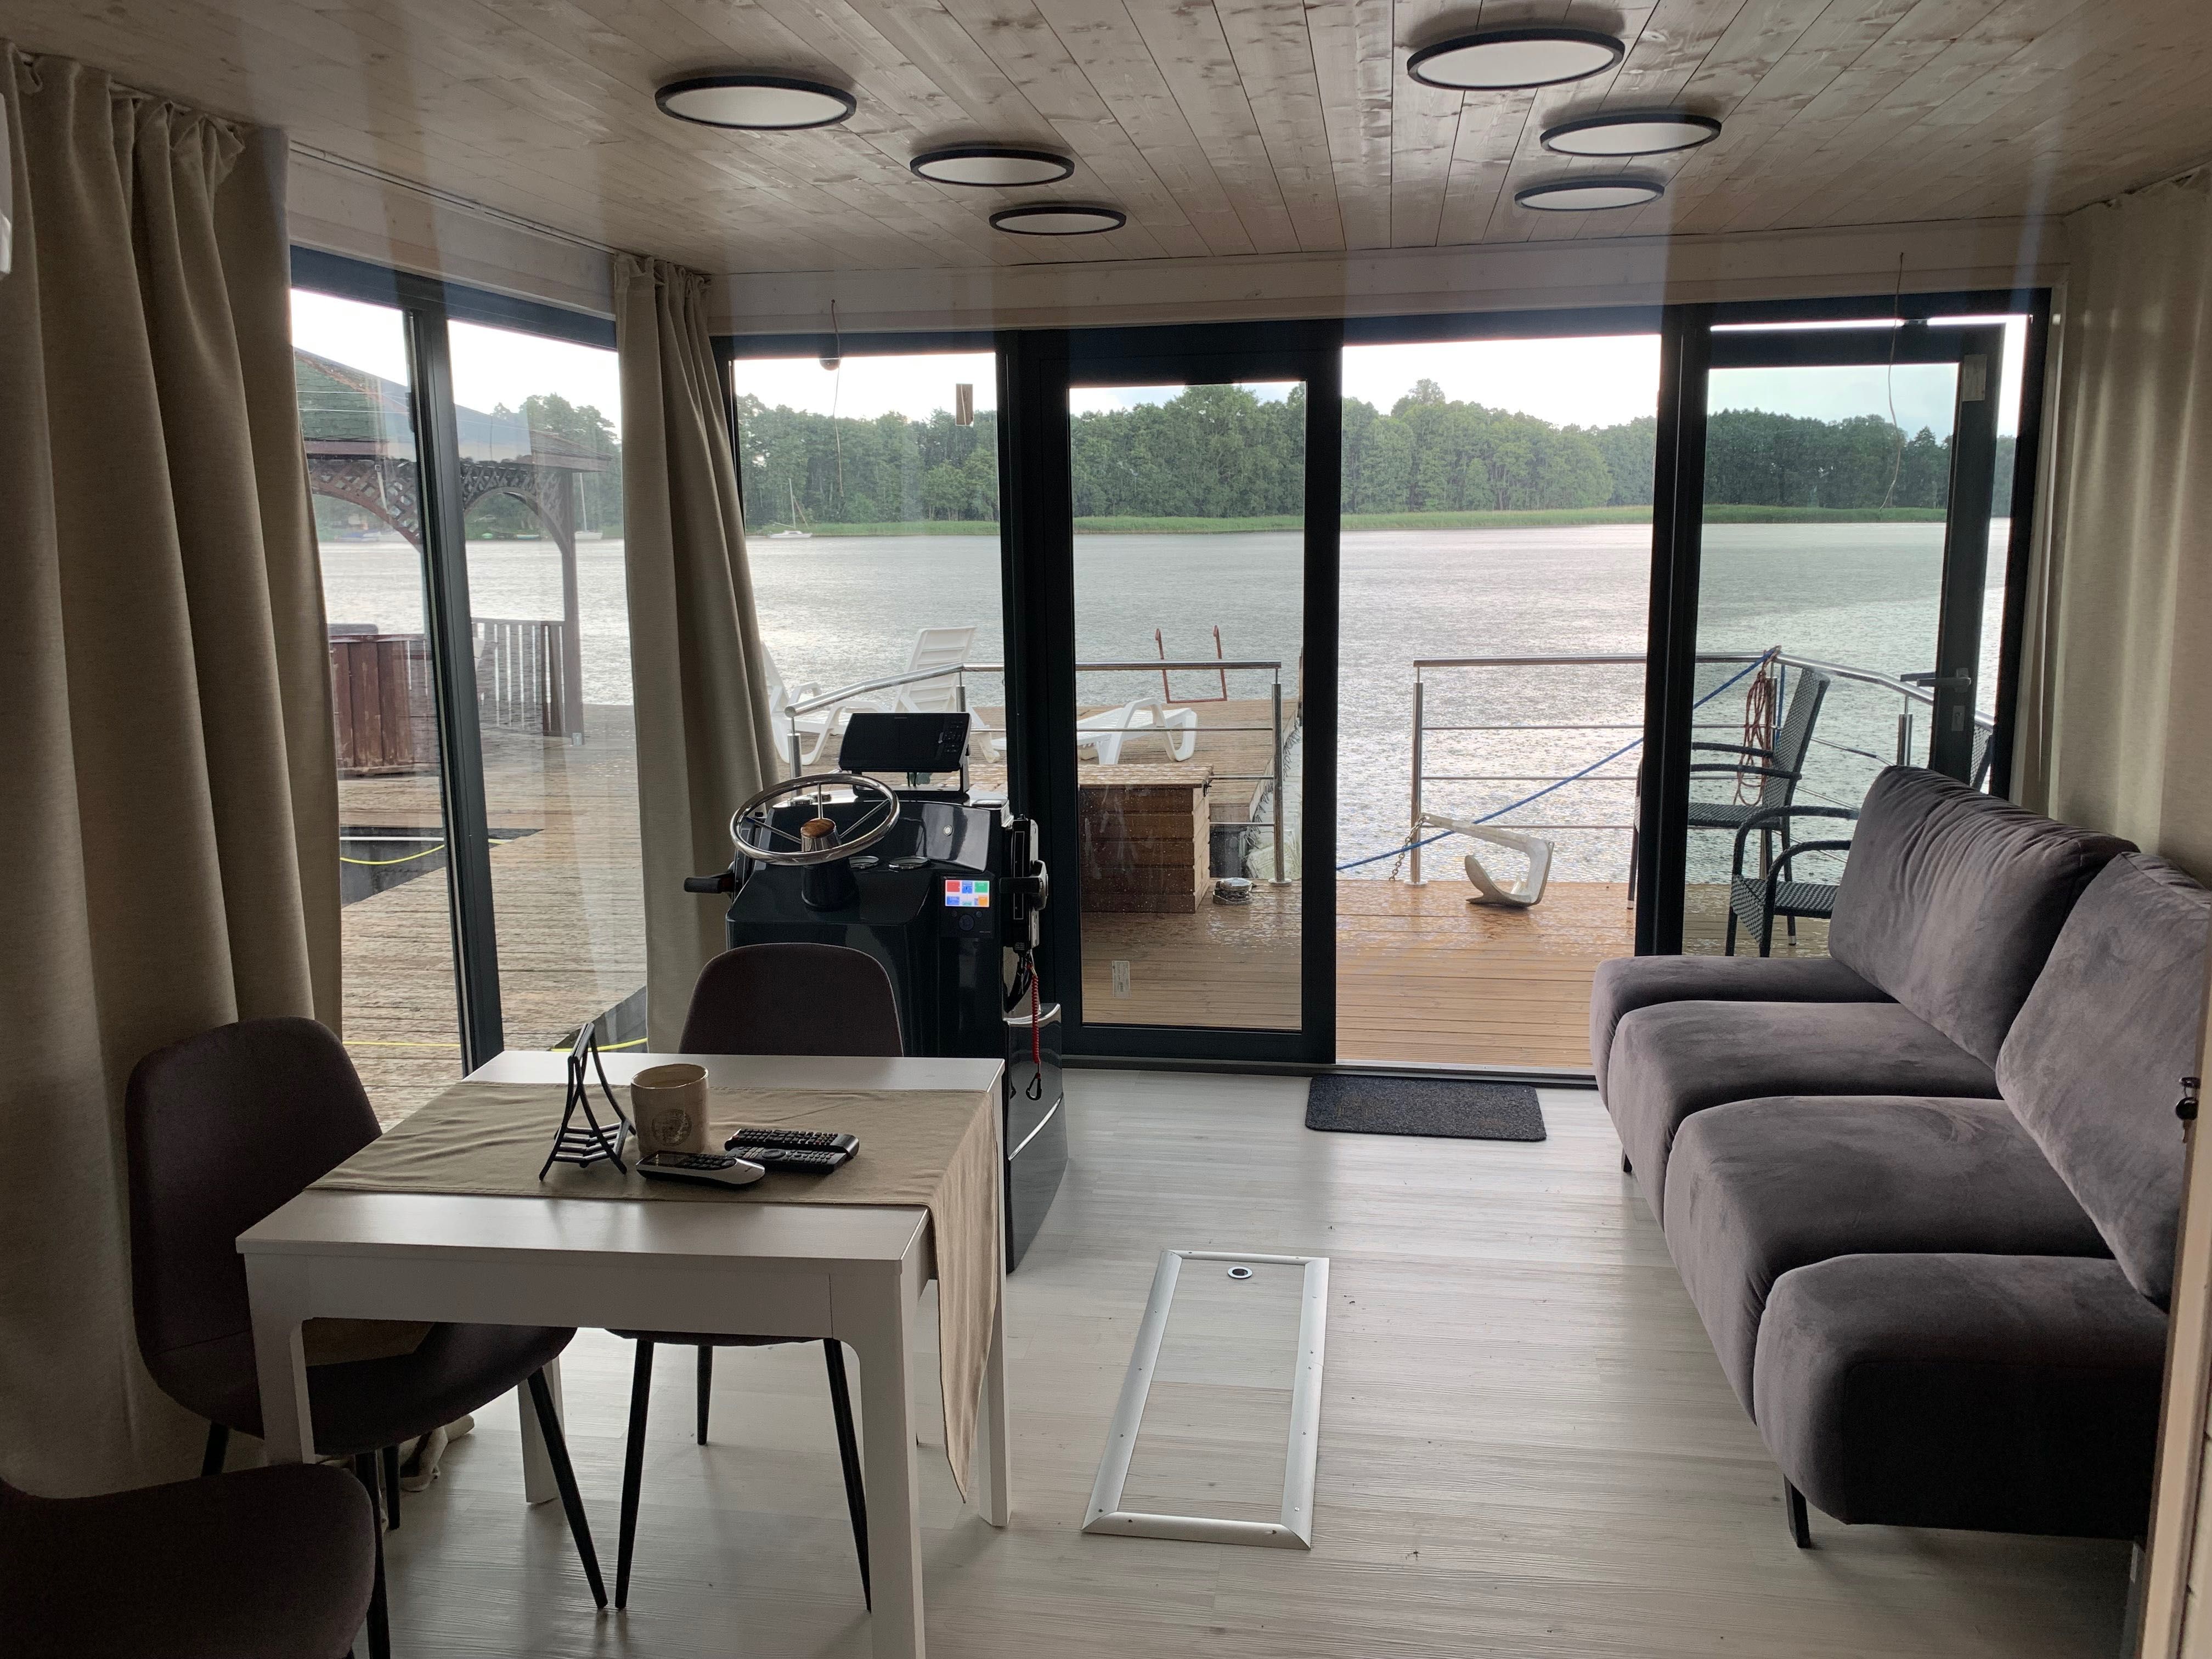 NOWY houseboat 12x4 nowoczesna łódź mieszkalna